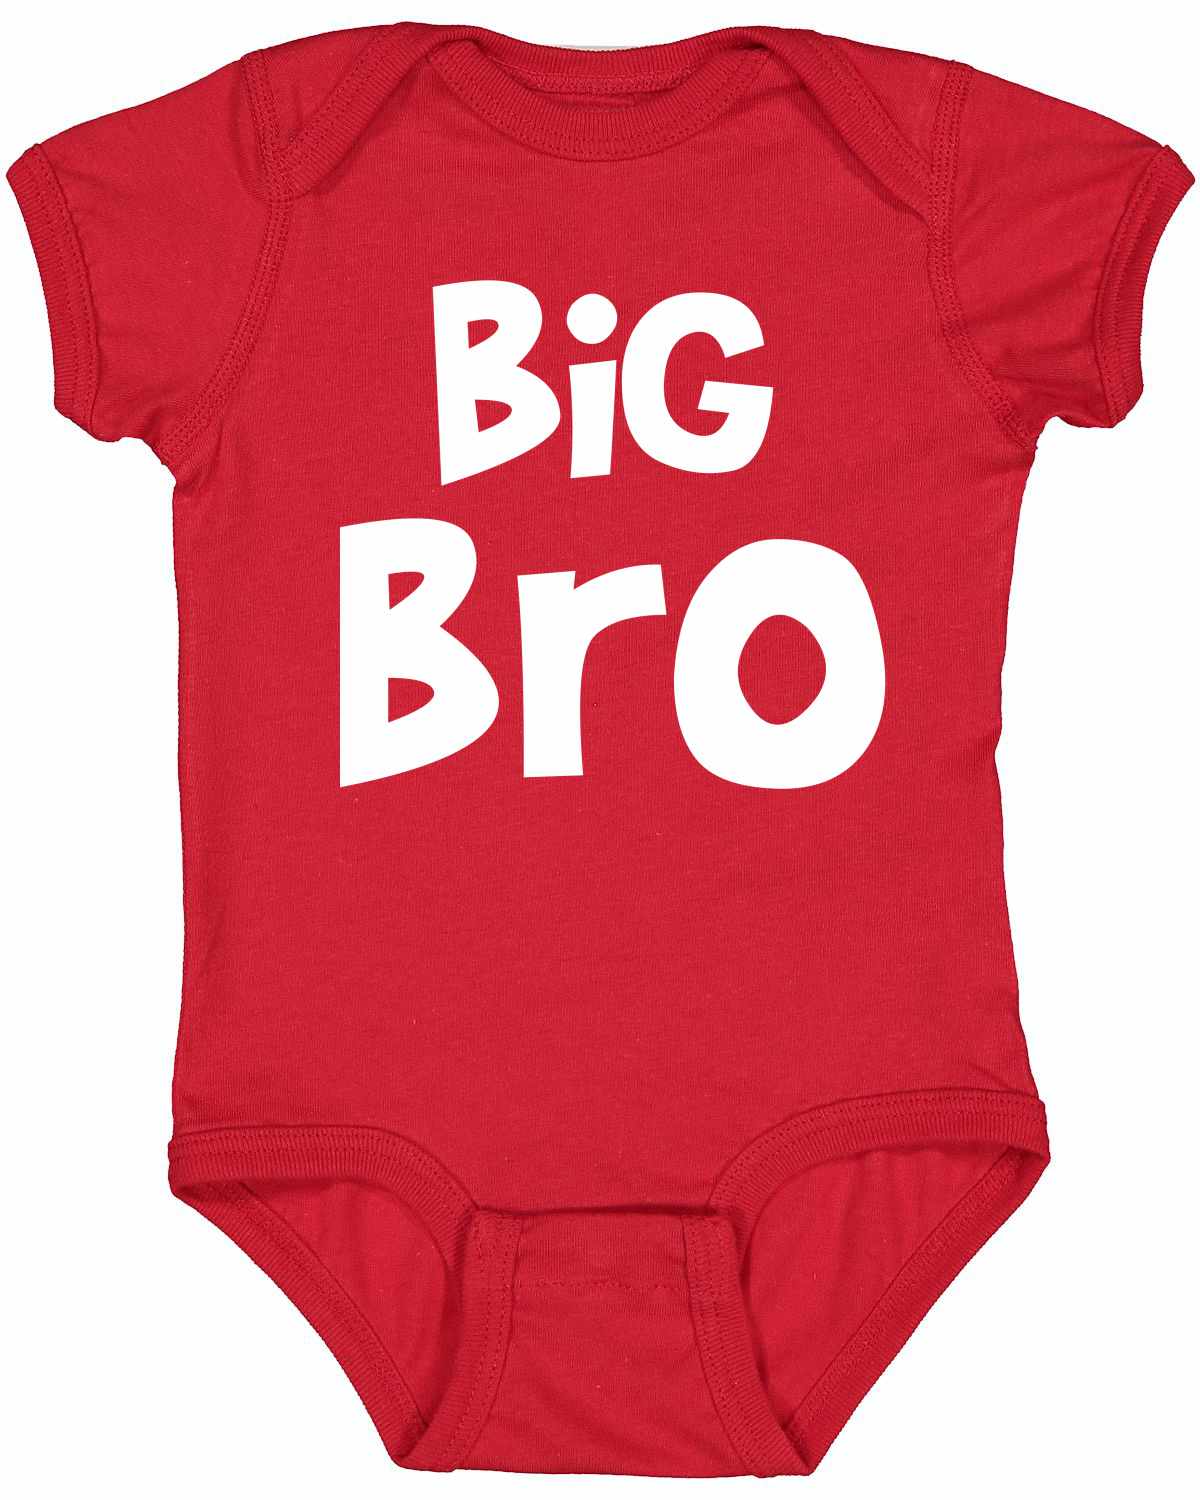 Big Bro Infant BodySuit (#1141-10)